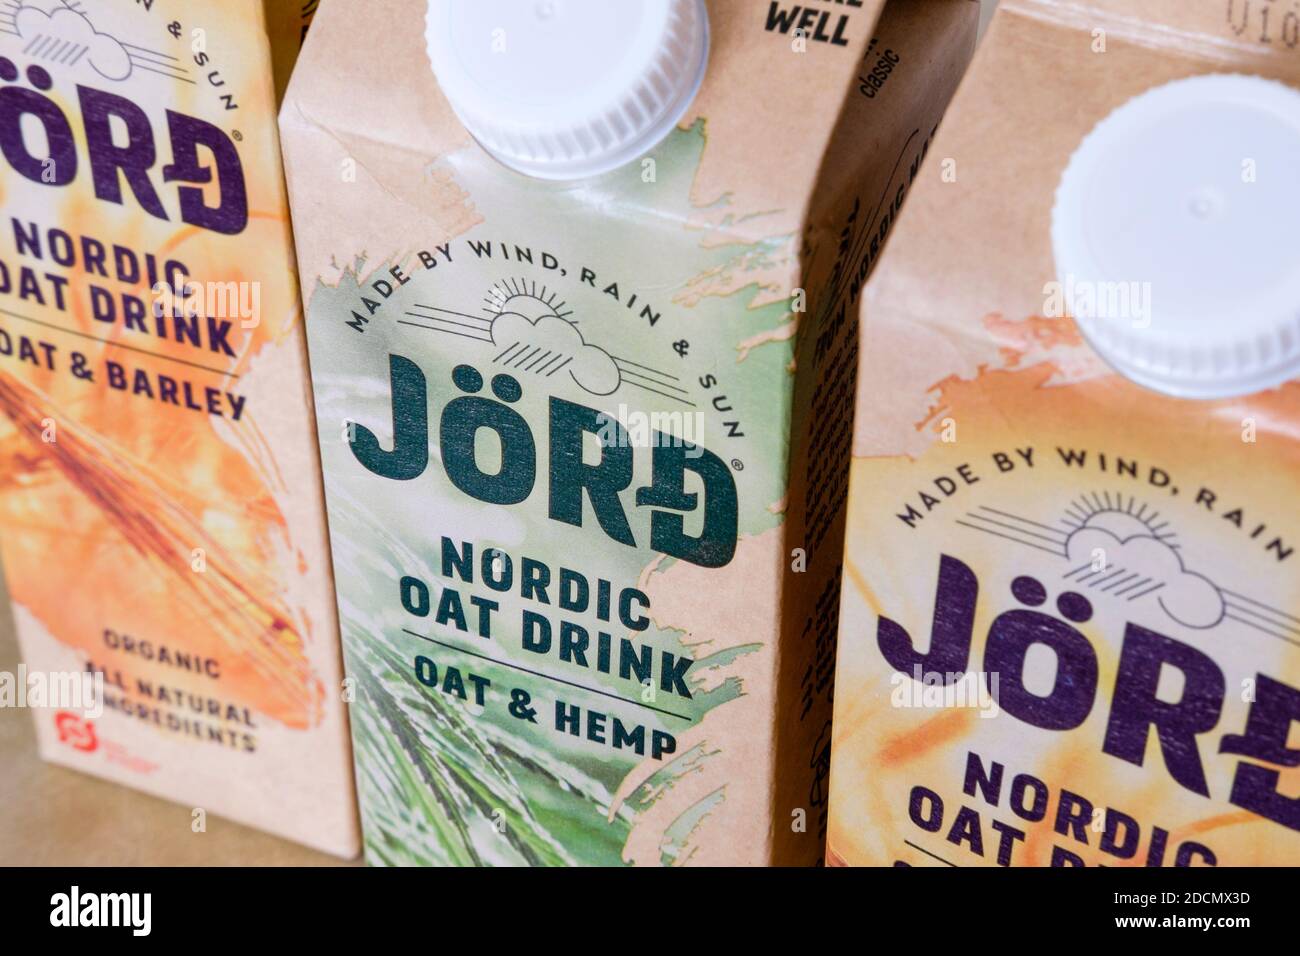 Cartoni di latte Jörd Nordic OAT drink alternative. Foto Stock